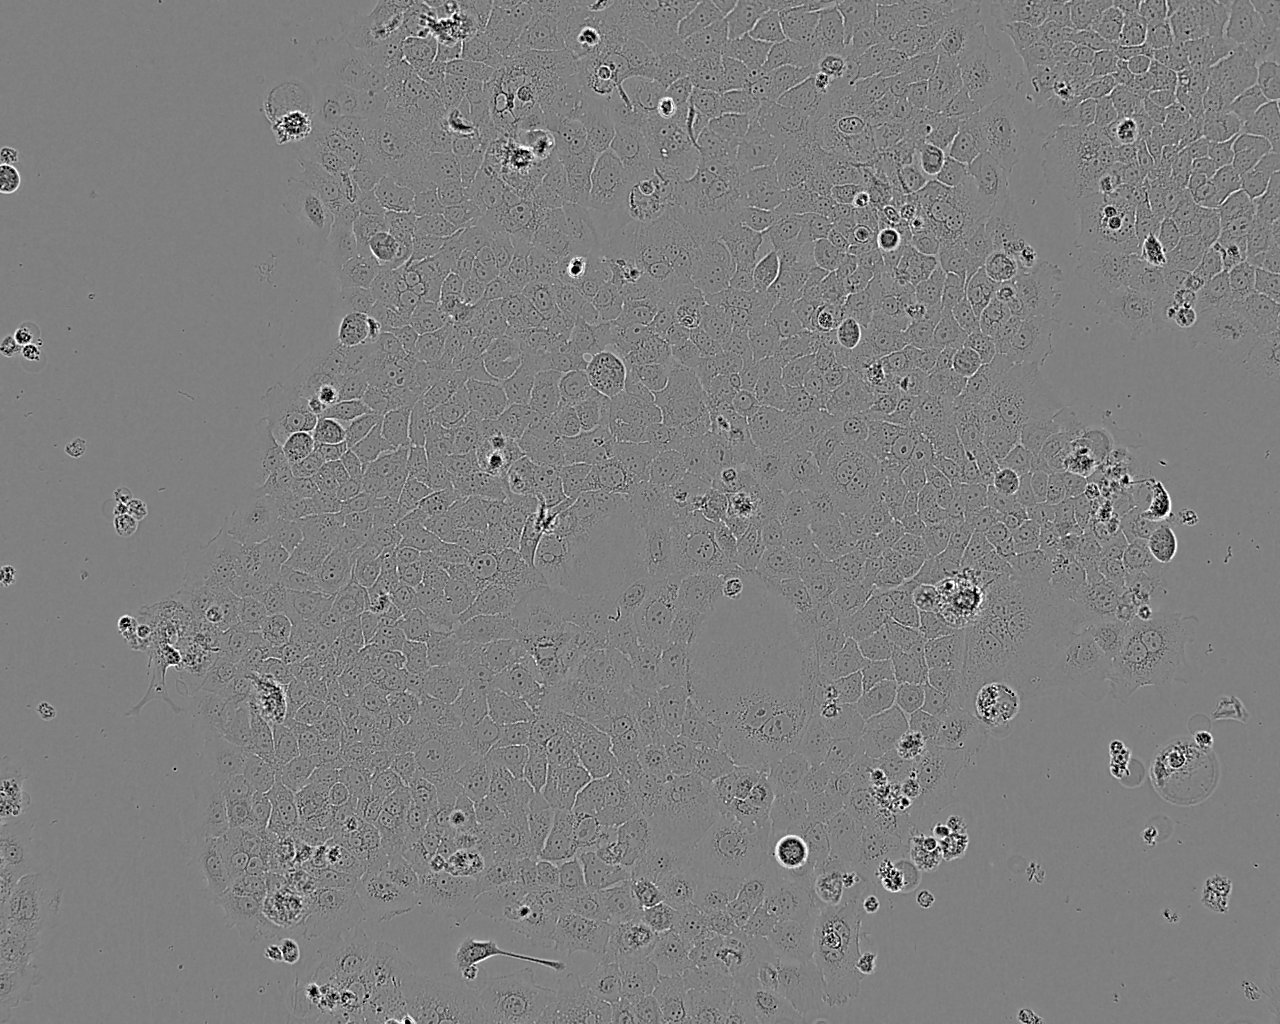 NCI-H2444 Cells|人非小细胞肺癌细胞系,NCI-H2444 Cells